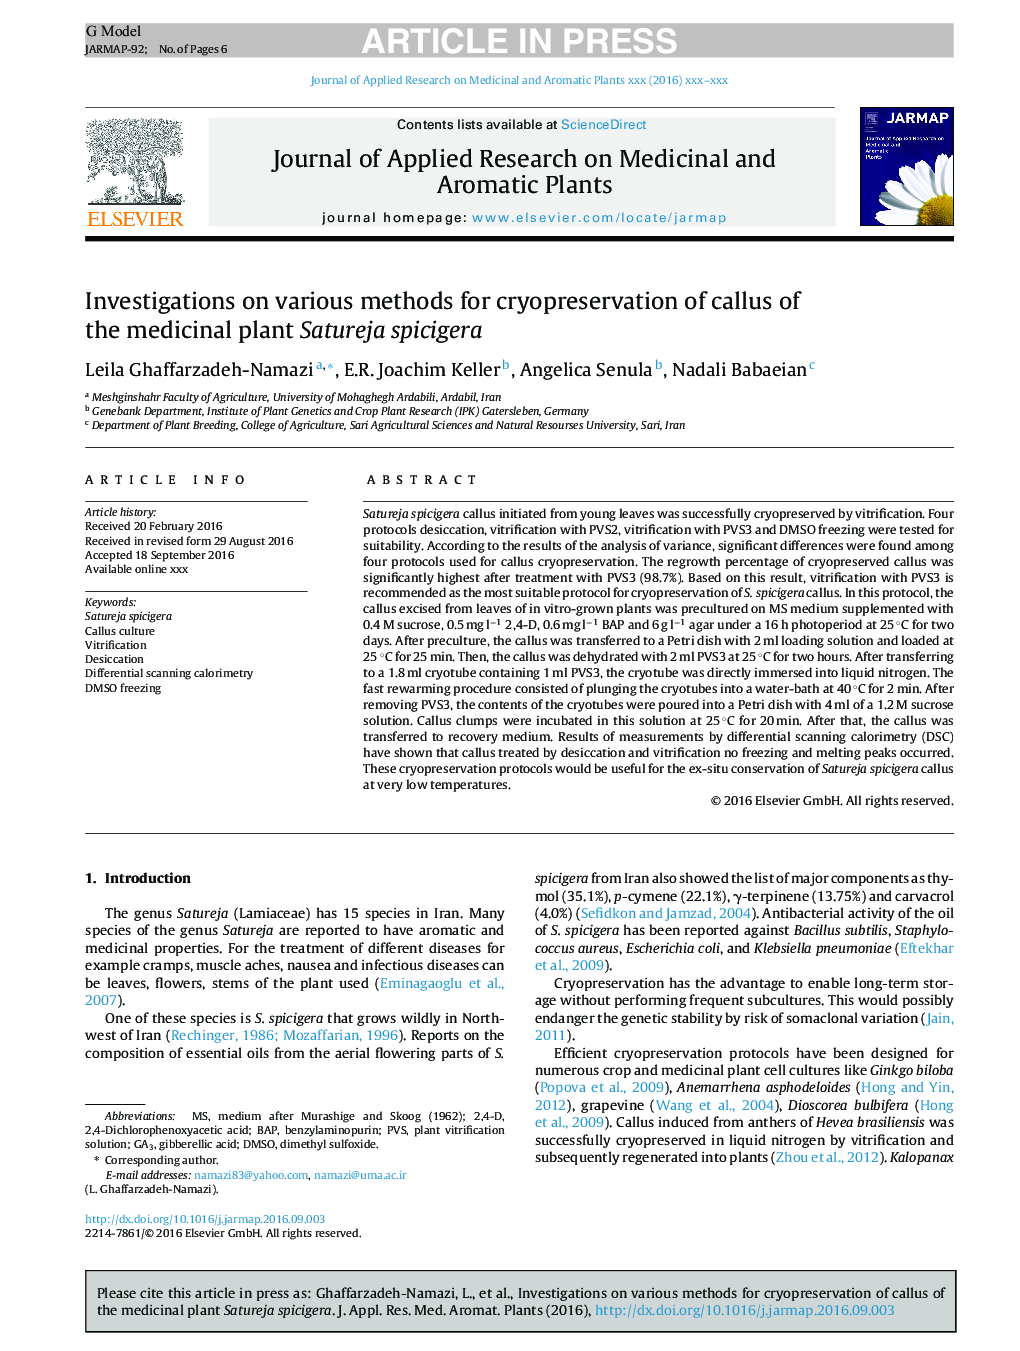 Investigations on various methods for cryopreservation of callus of the medicinal plant Satureja spicigera